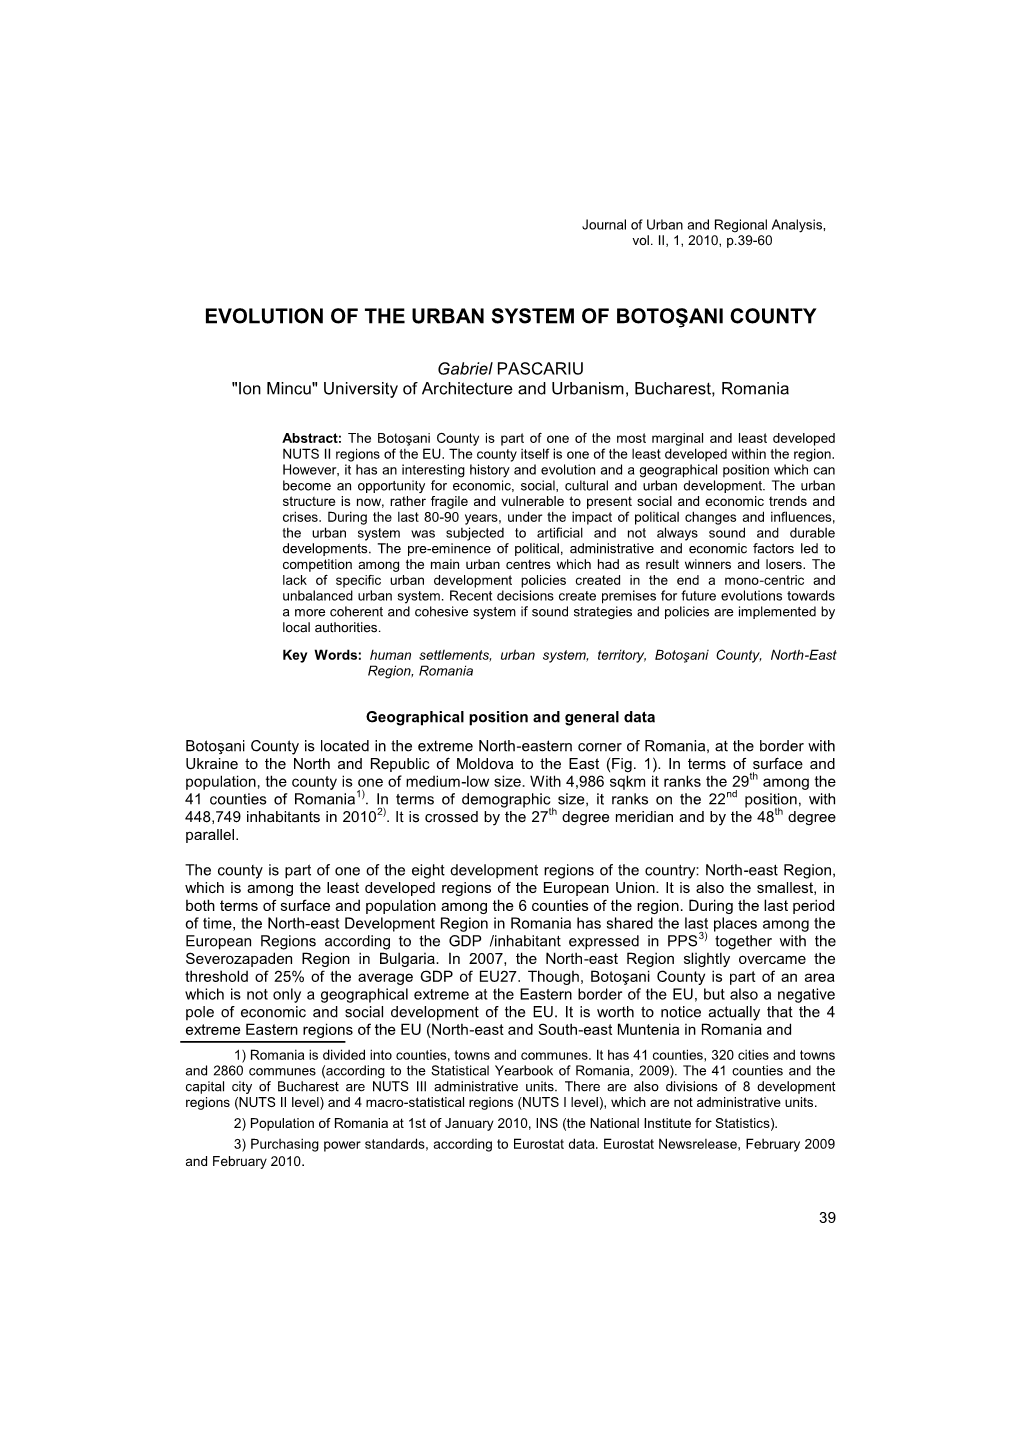 Evolution of the Urban System of Botoşani County